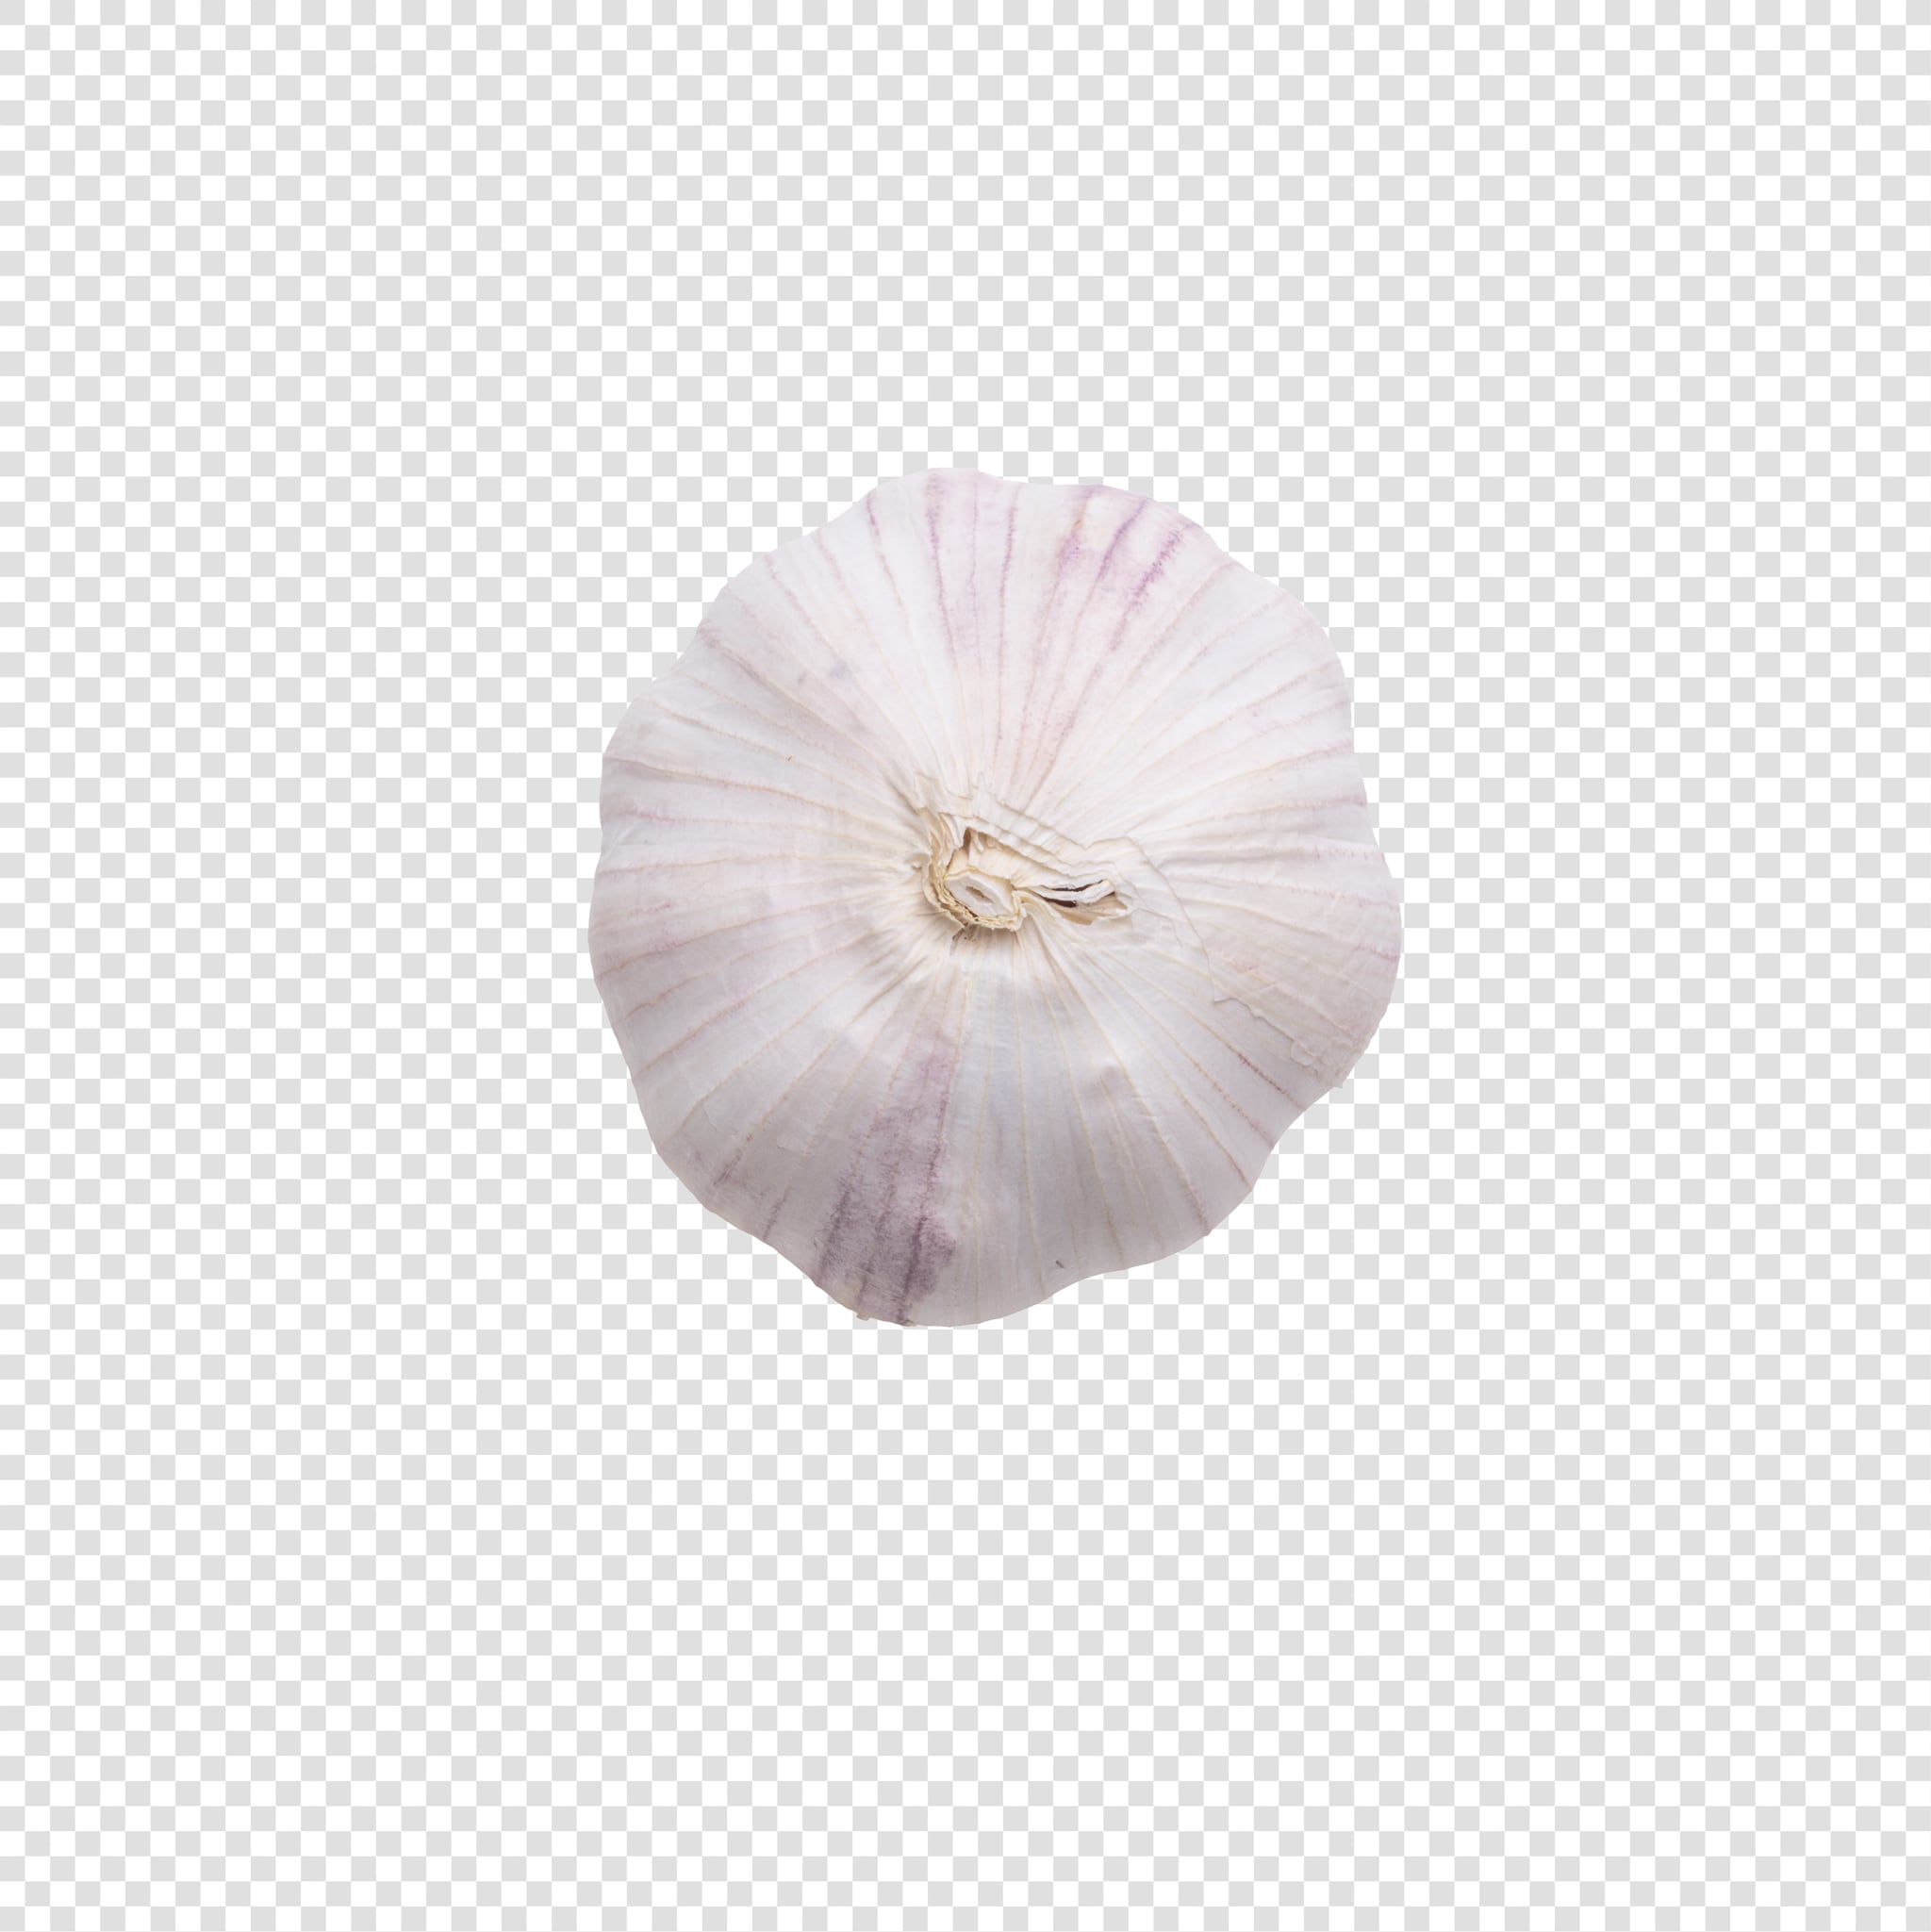 Garlic PSD isolated image